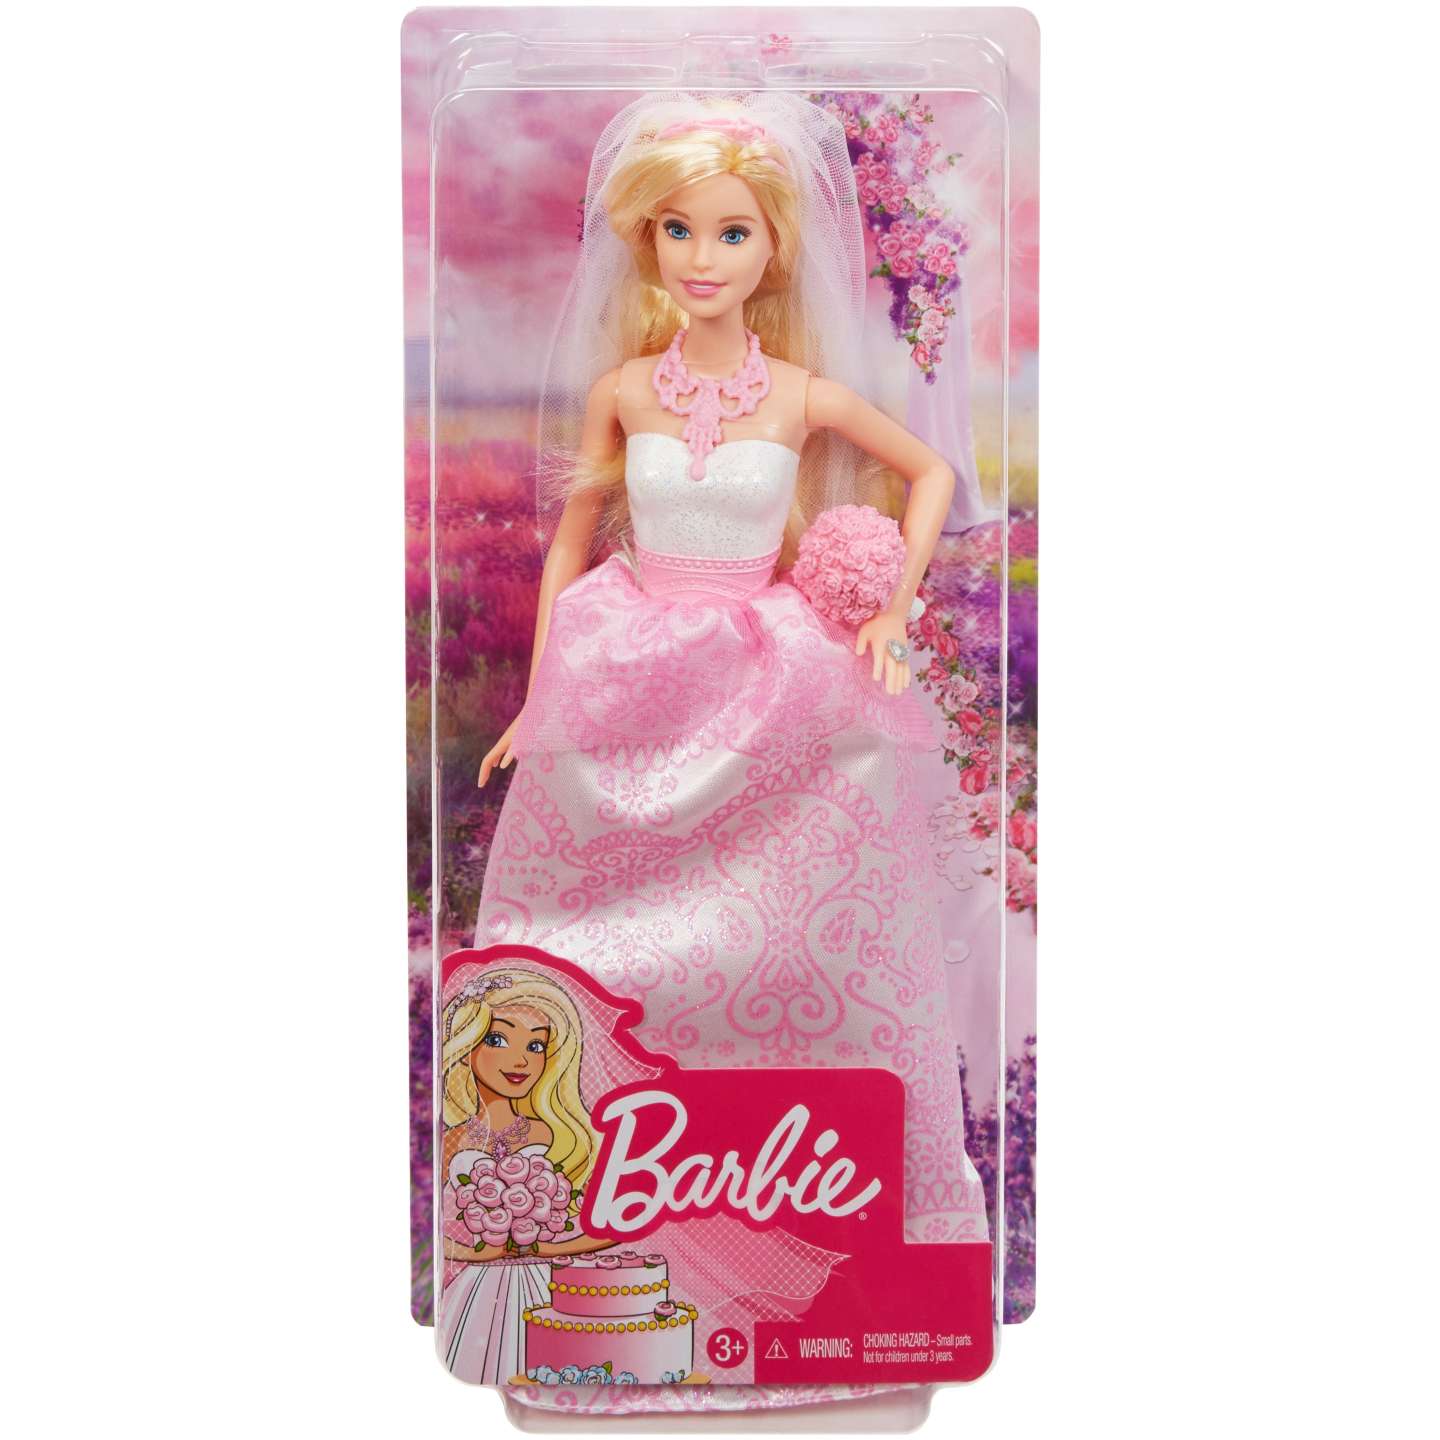 Barbie - Bride Doll